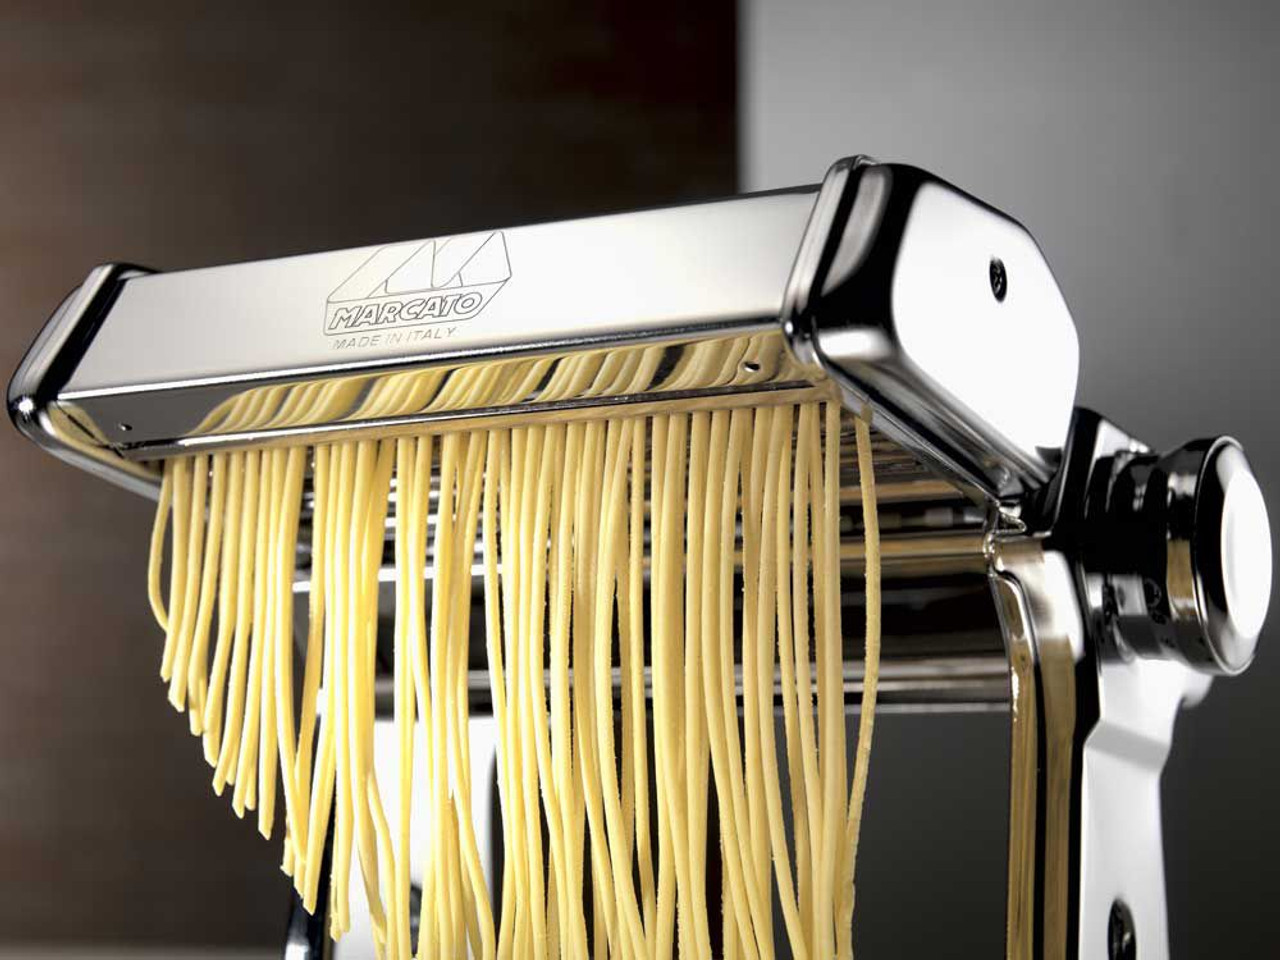 Marcato Atlas 150 Pasta Machine – Kiss the Cook